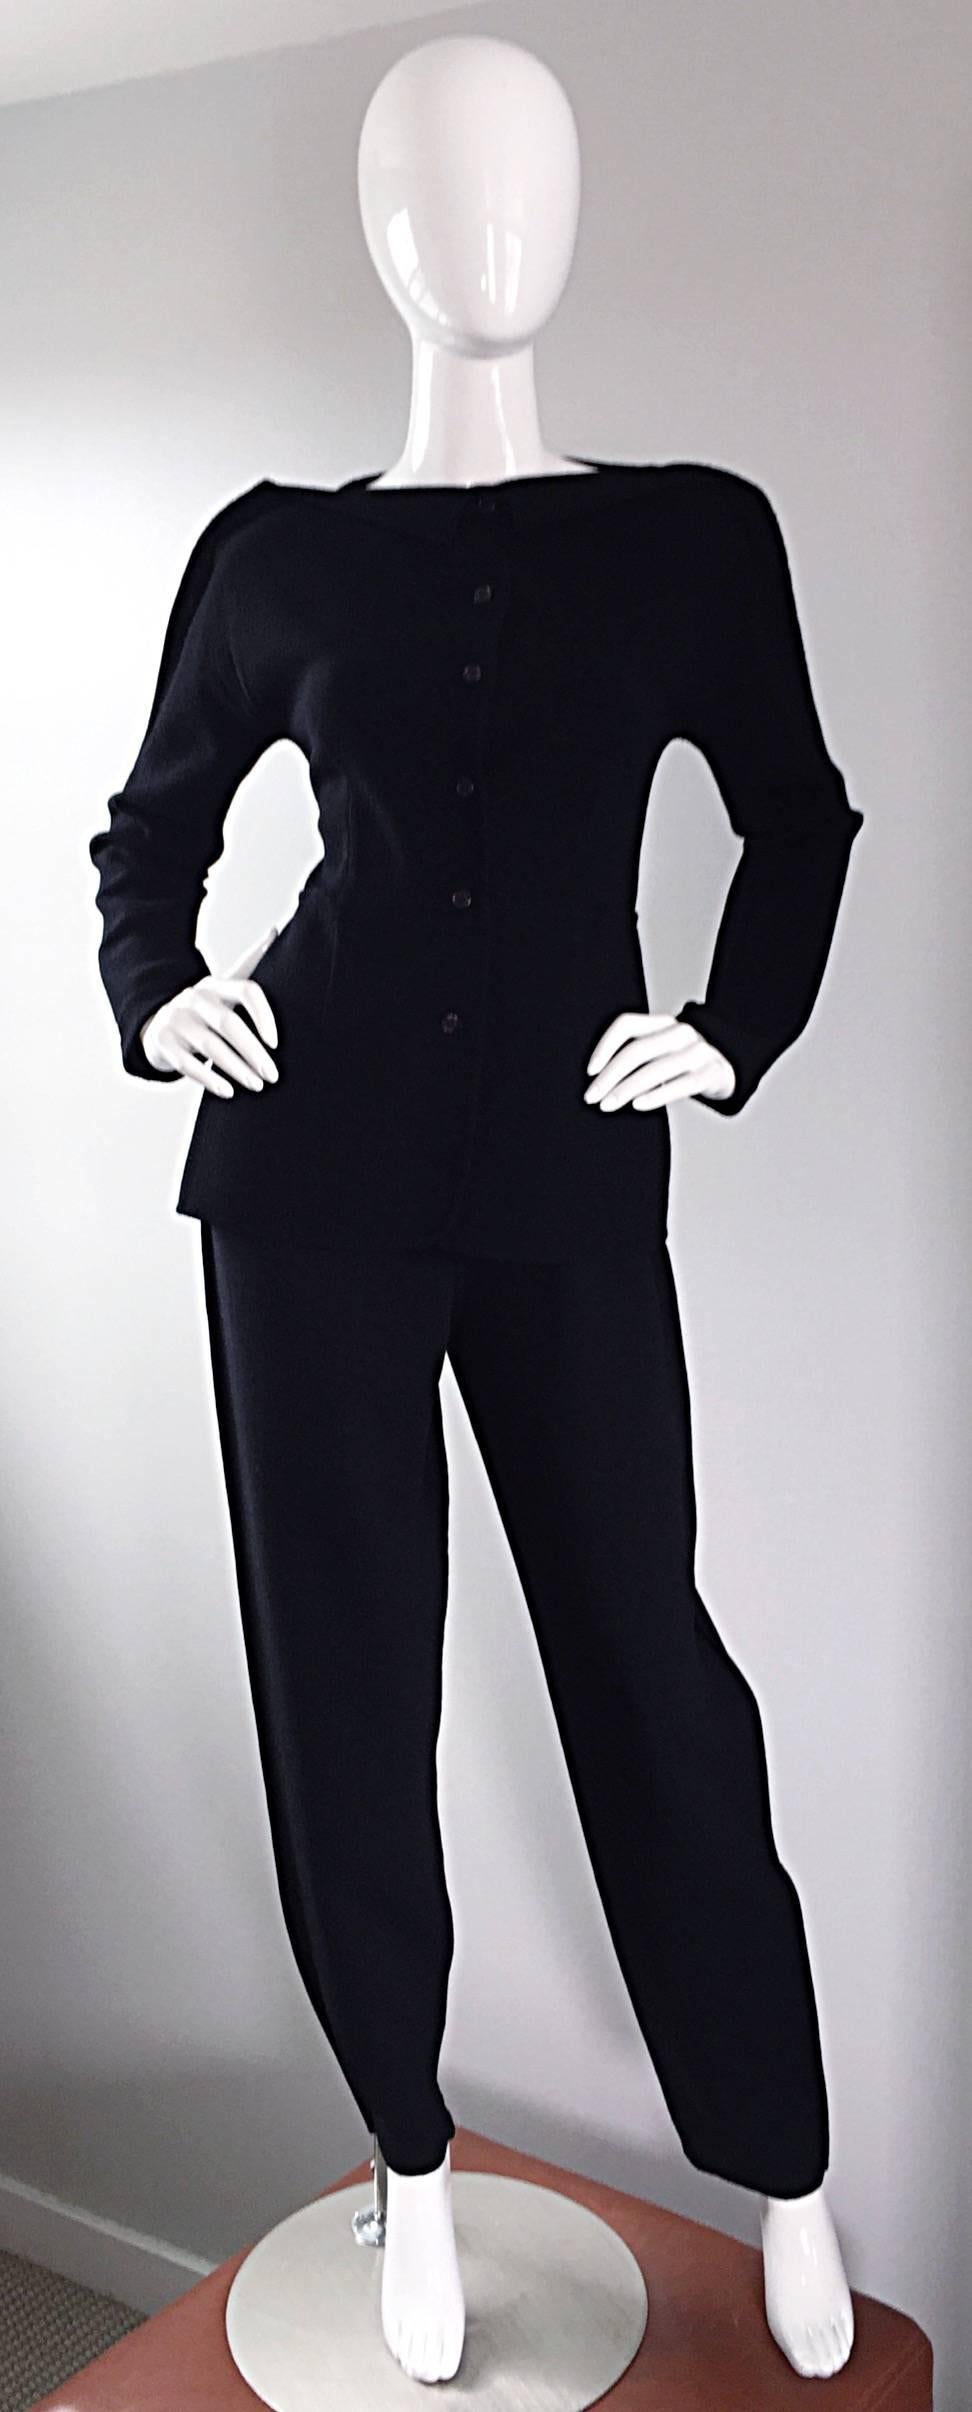 Women's 1990s Geoffrey Beene Black Crepe Avant Garde Jacket and Pants Suit Ensemble For Sale